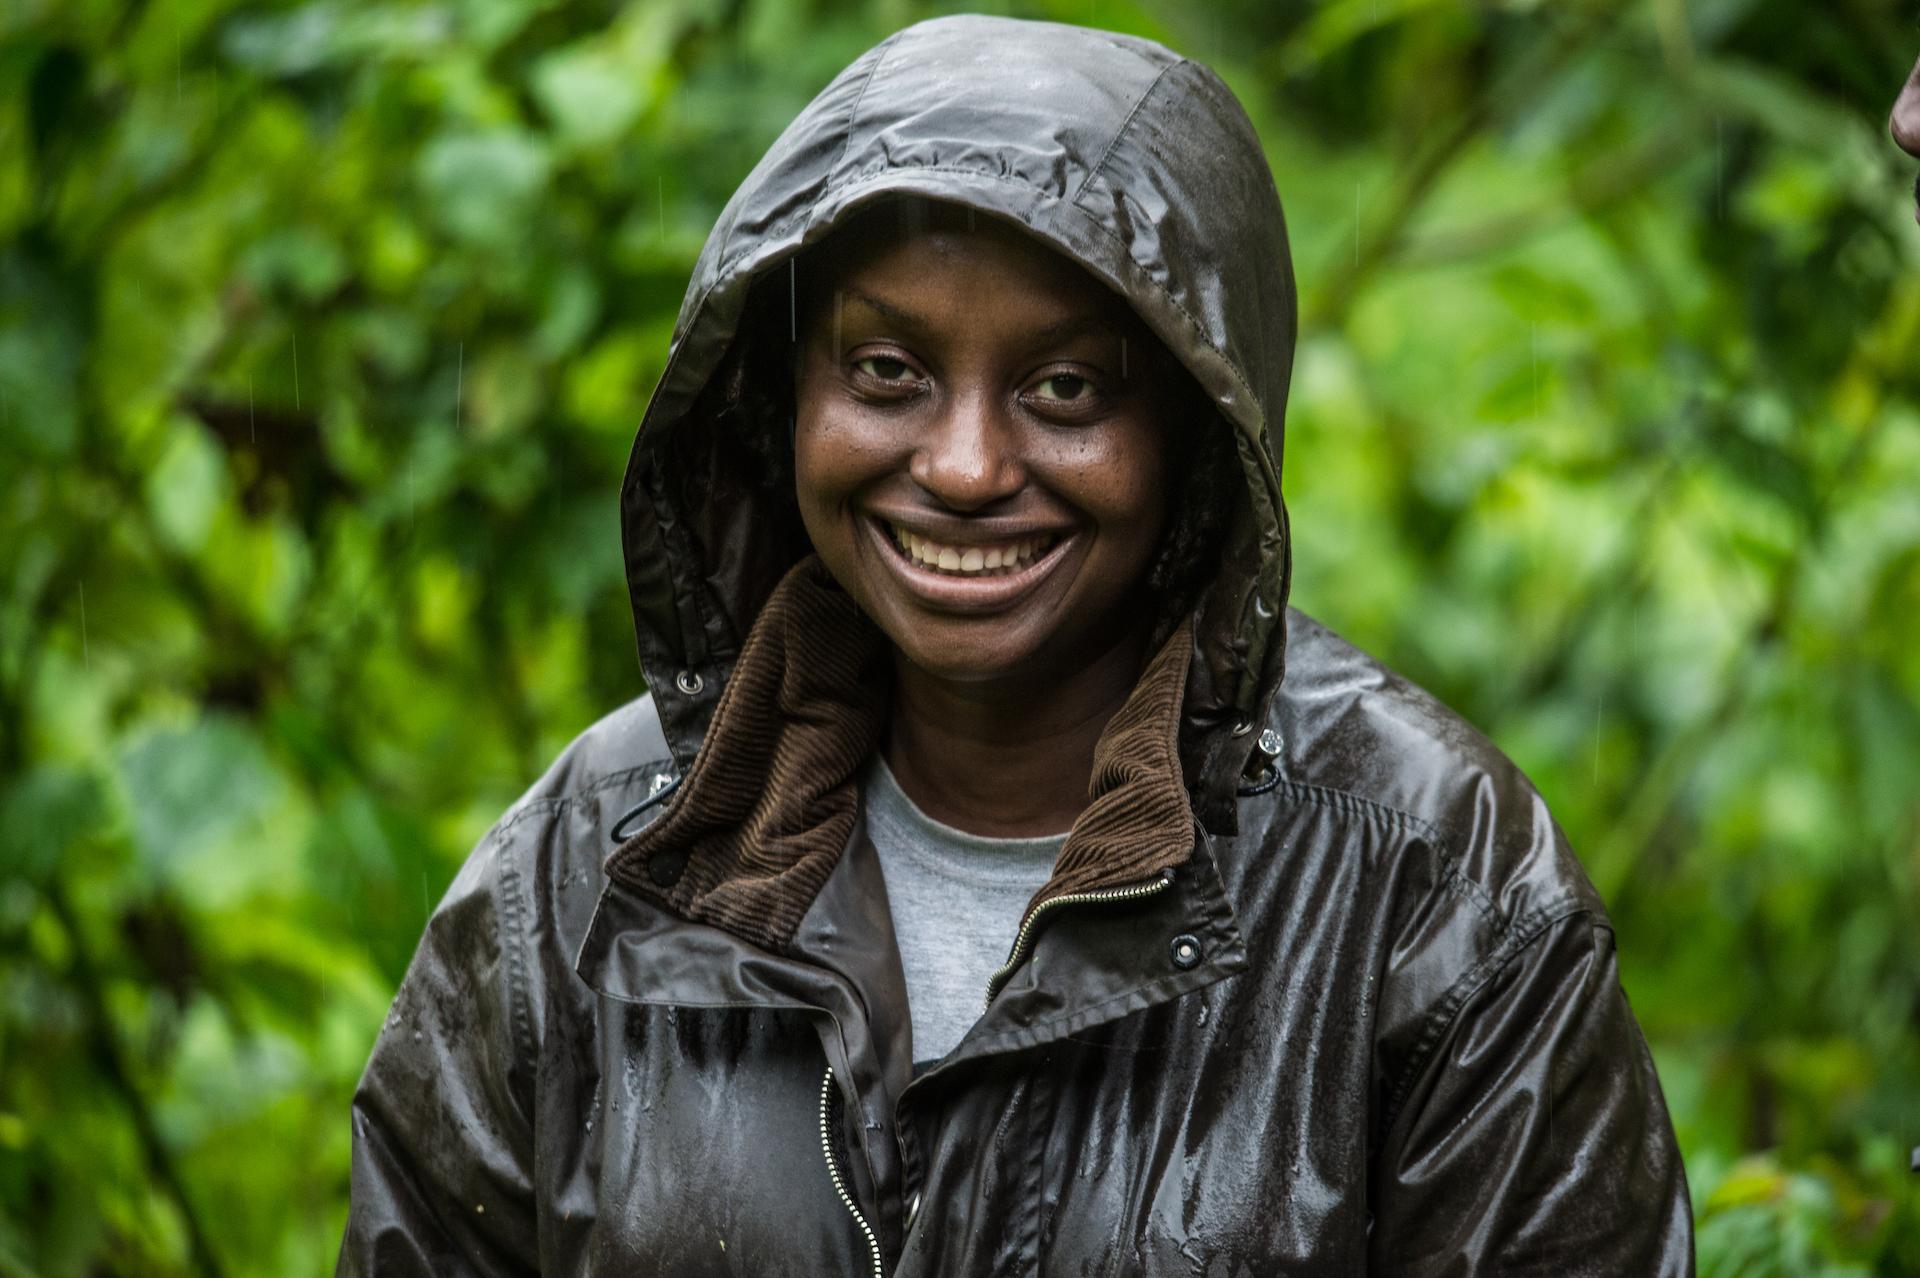 A woman wears a dark raincoat in the forest in Uganda